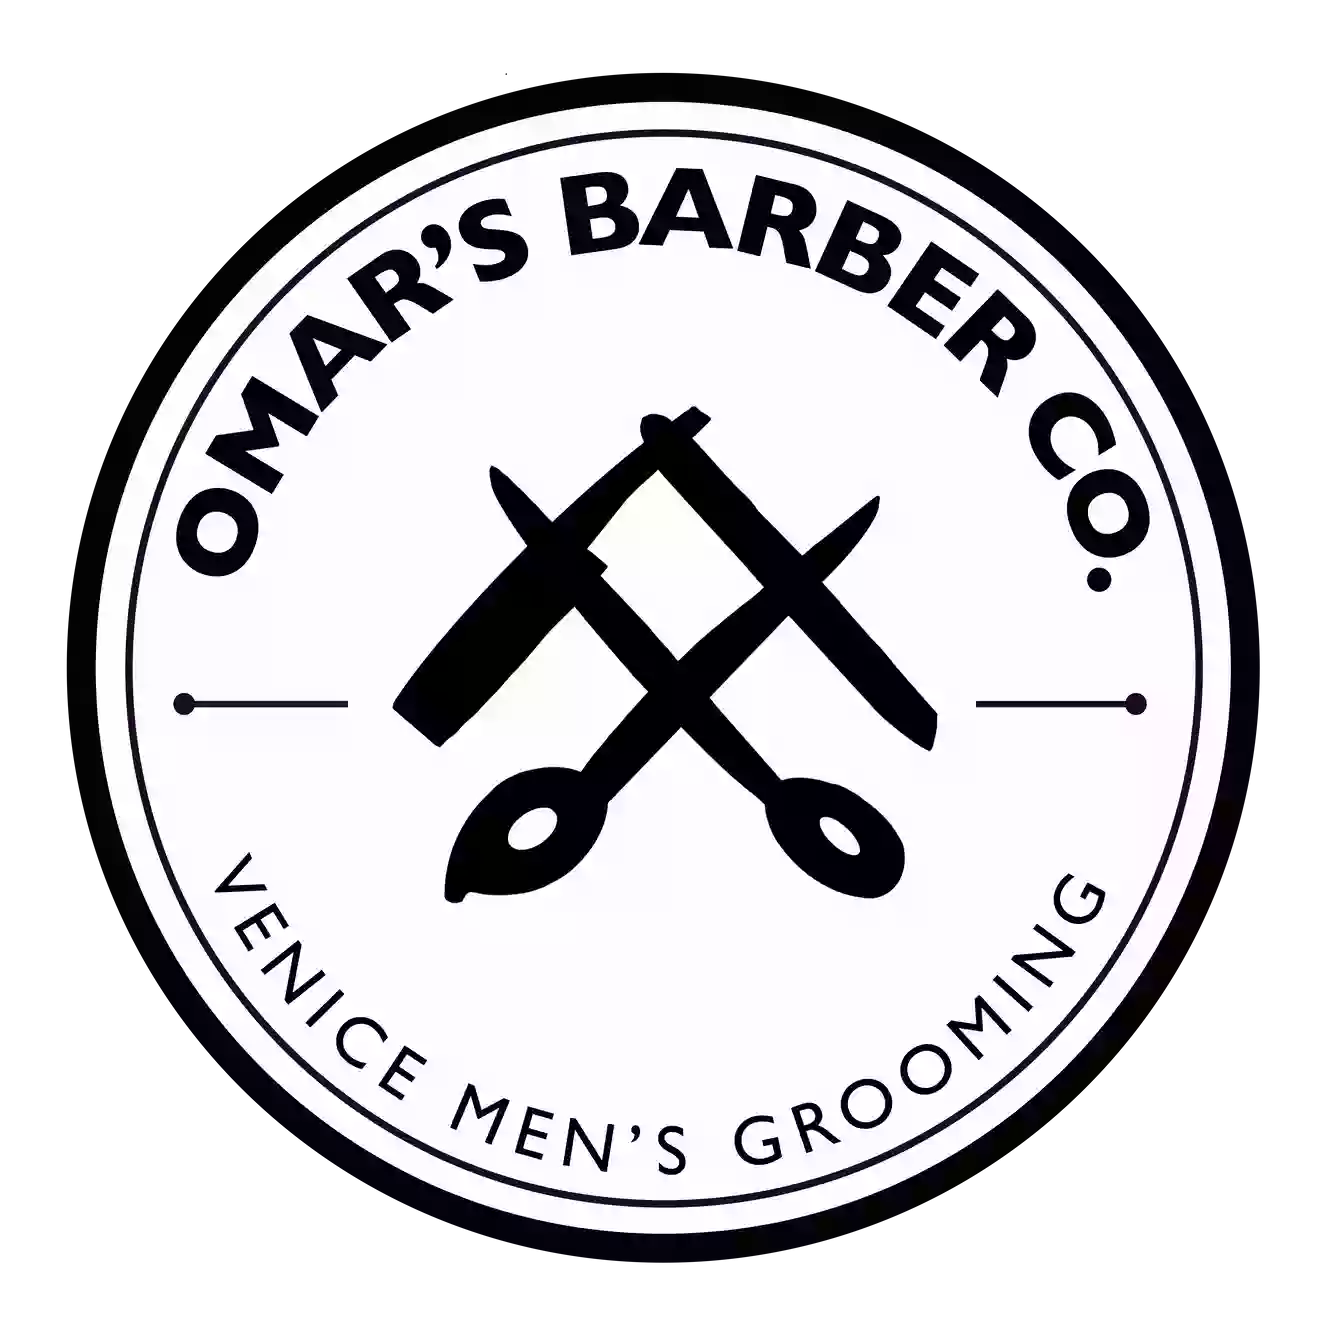 Omar's Barber Company